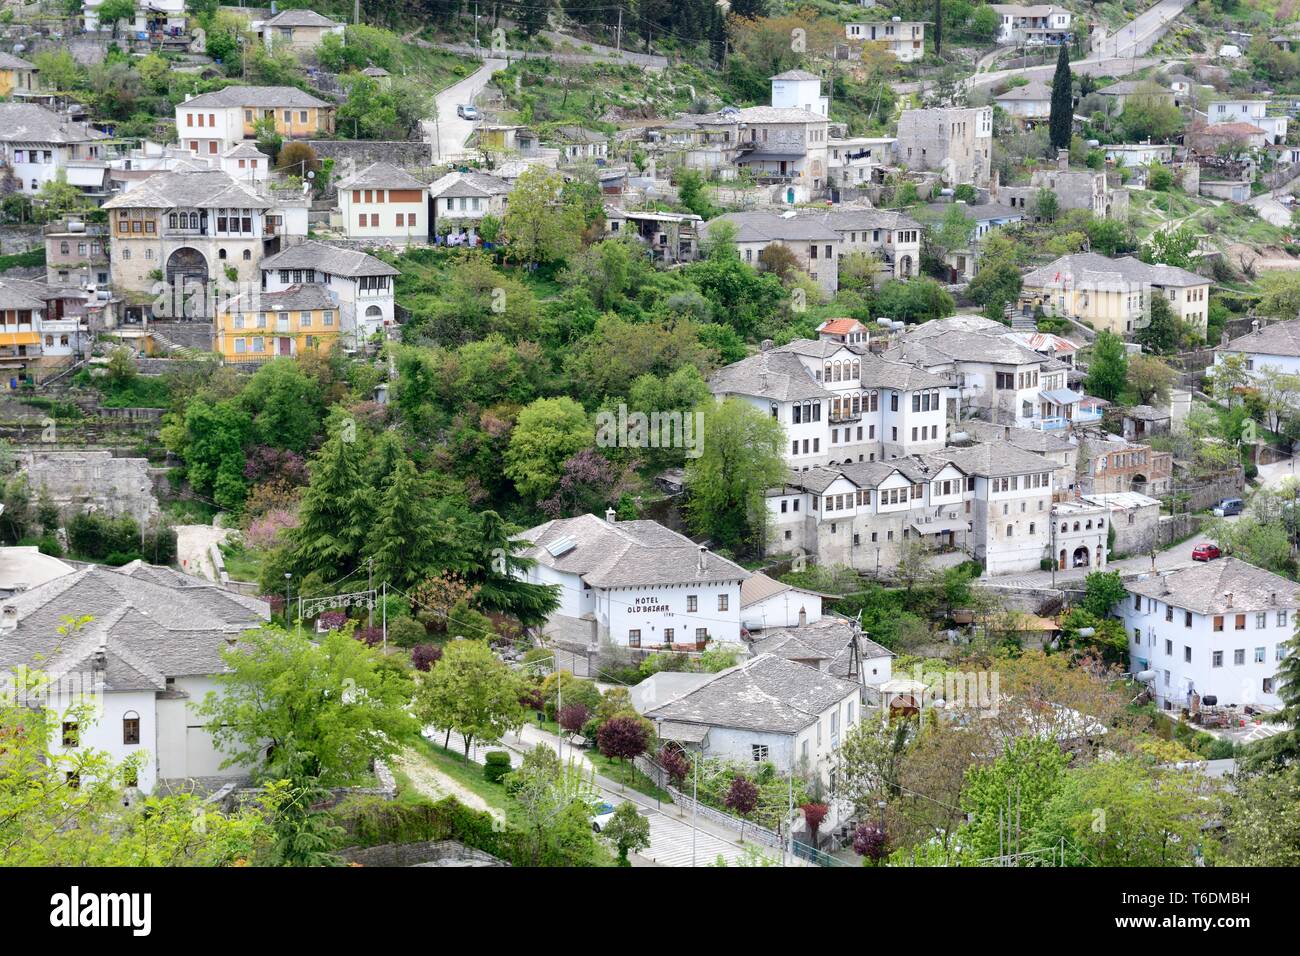 Stadt Girokastra seltenes Beispiel einer gut erhaltenen osmanischen Stadt UNESCO Weltkulturerbe Albanien Stockfoto